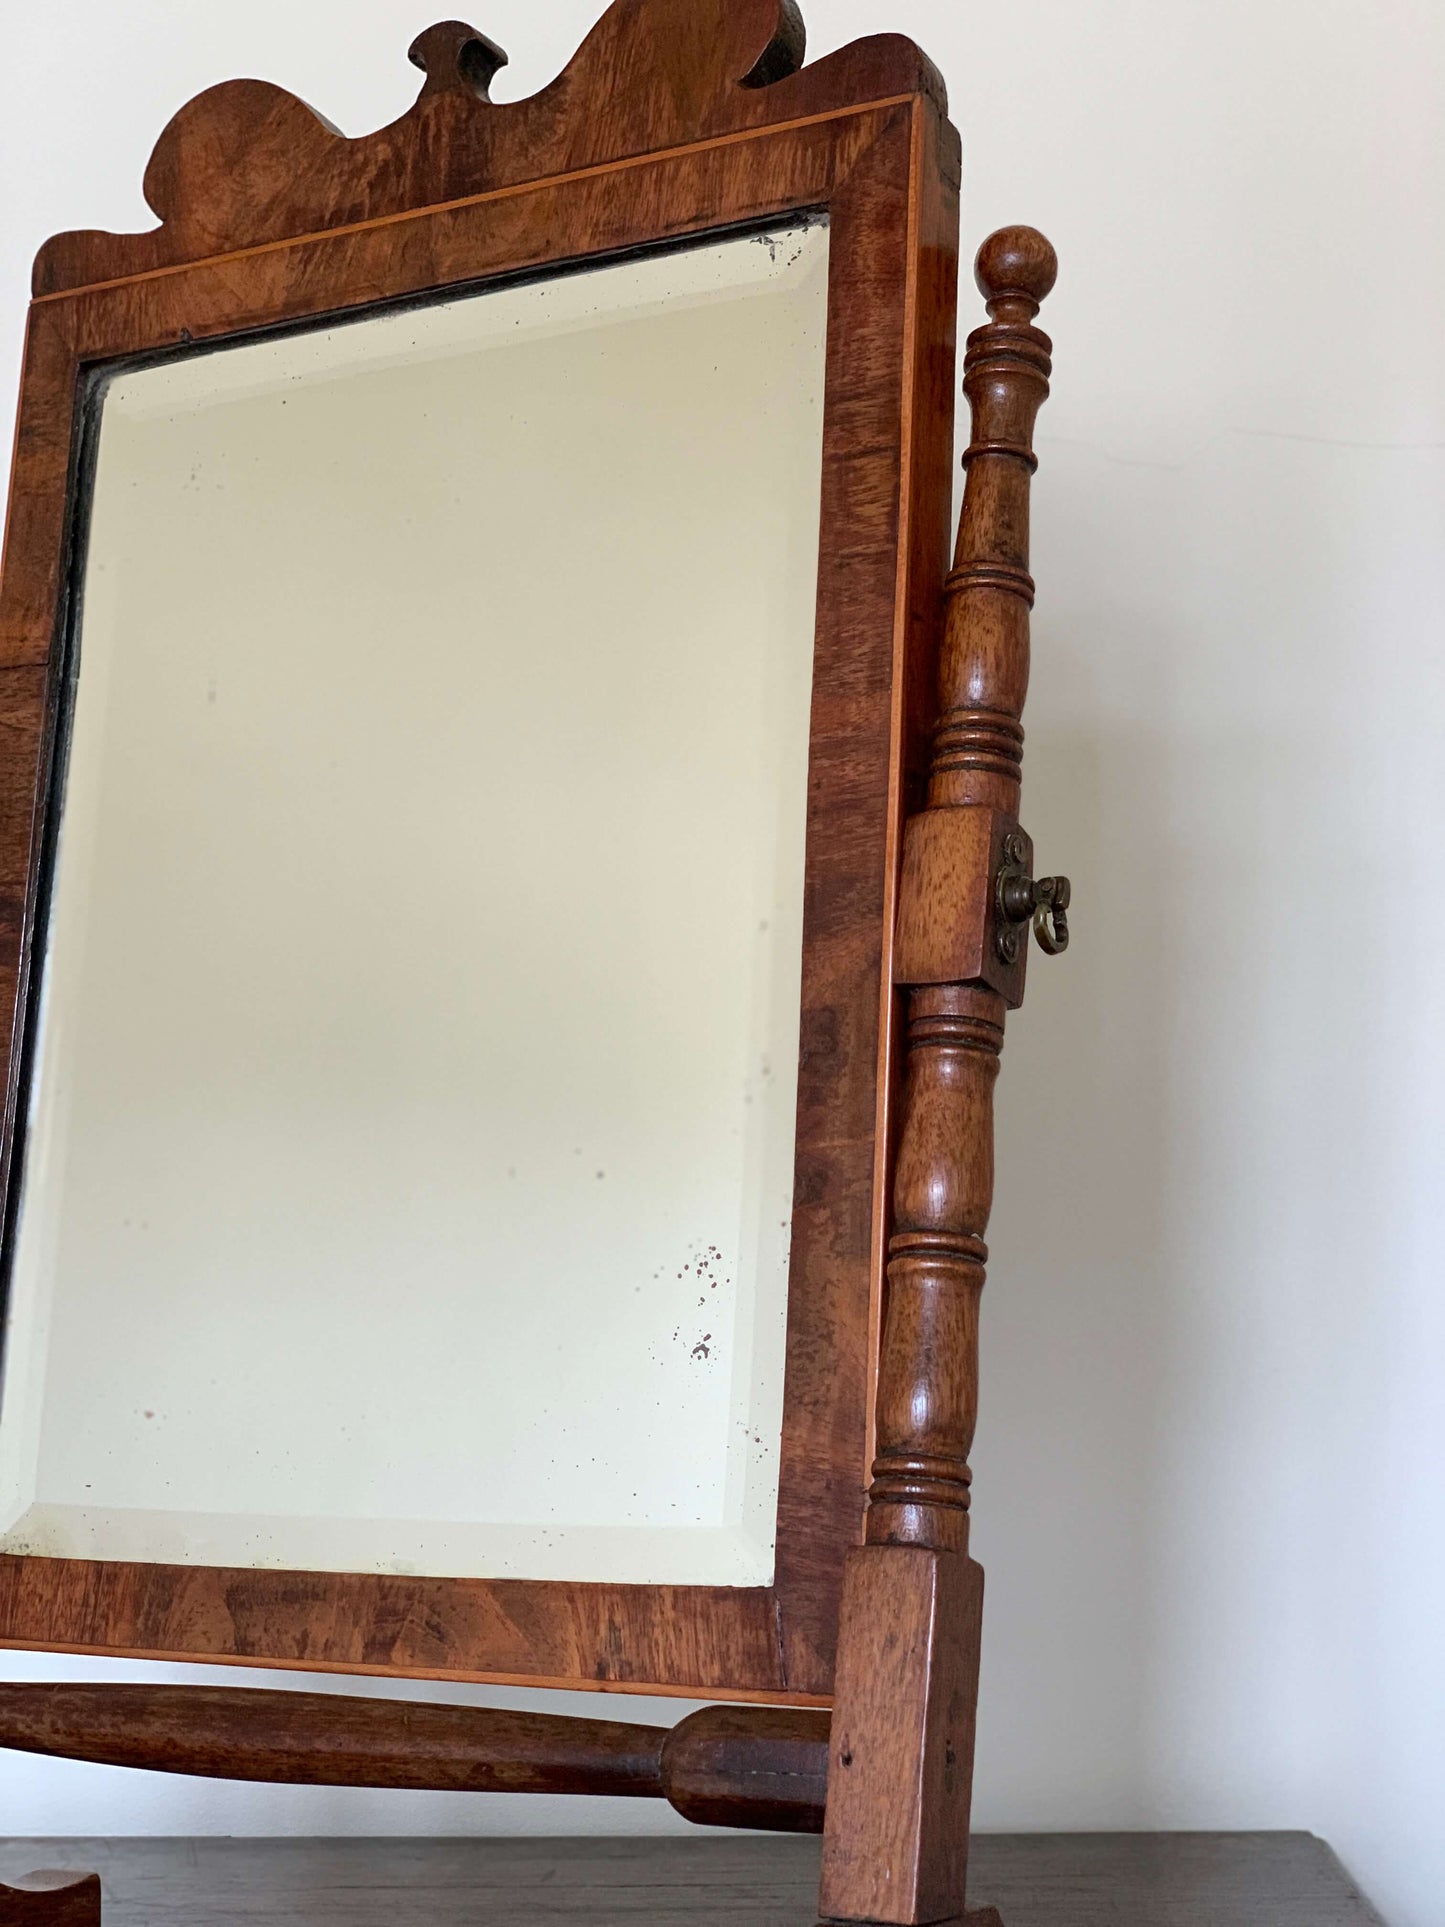 Antique walnut veneer table-top mirror